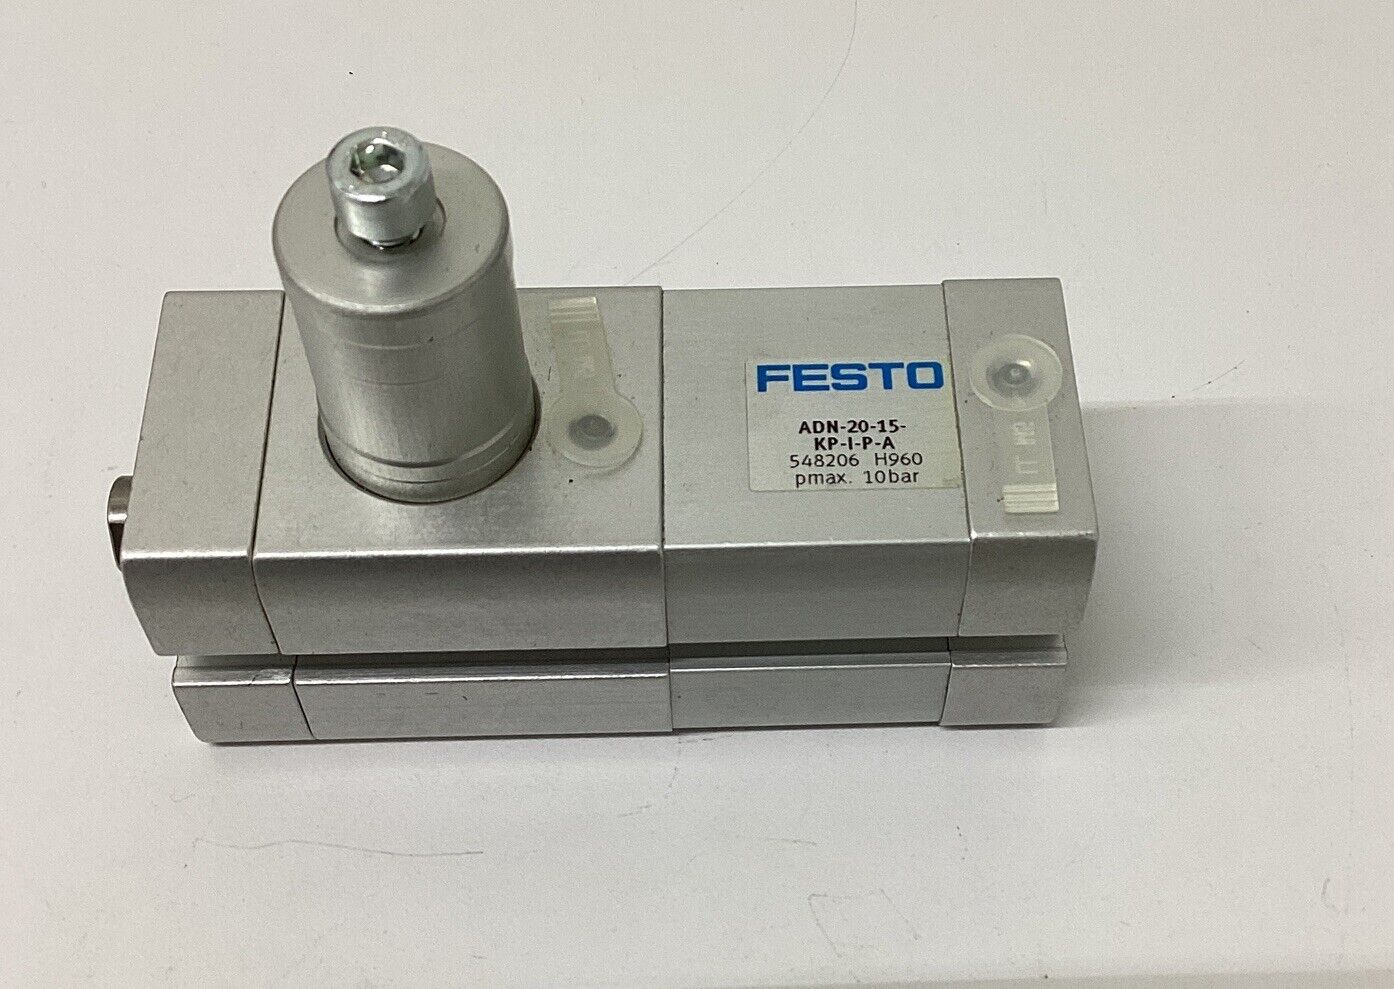 Festo ADN-20-15-KP-1-P-A / 548206 Air Cylinder 20mm Bore x 15mm Stroke (BL292)